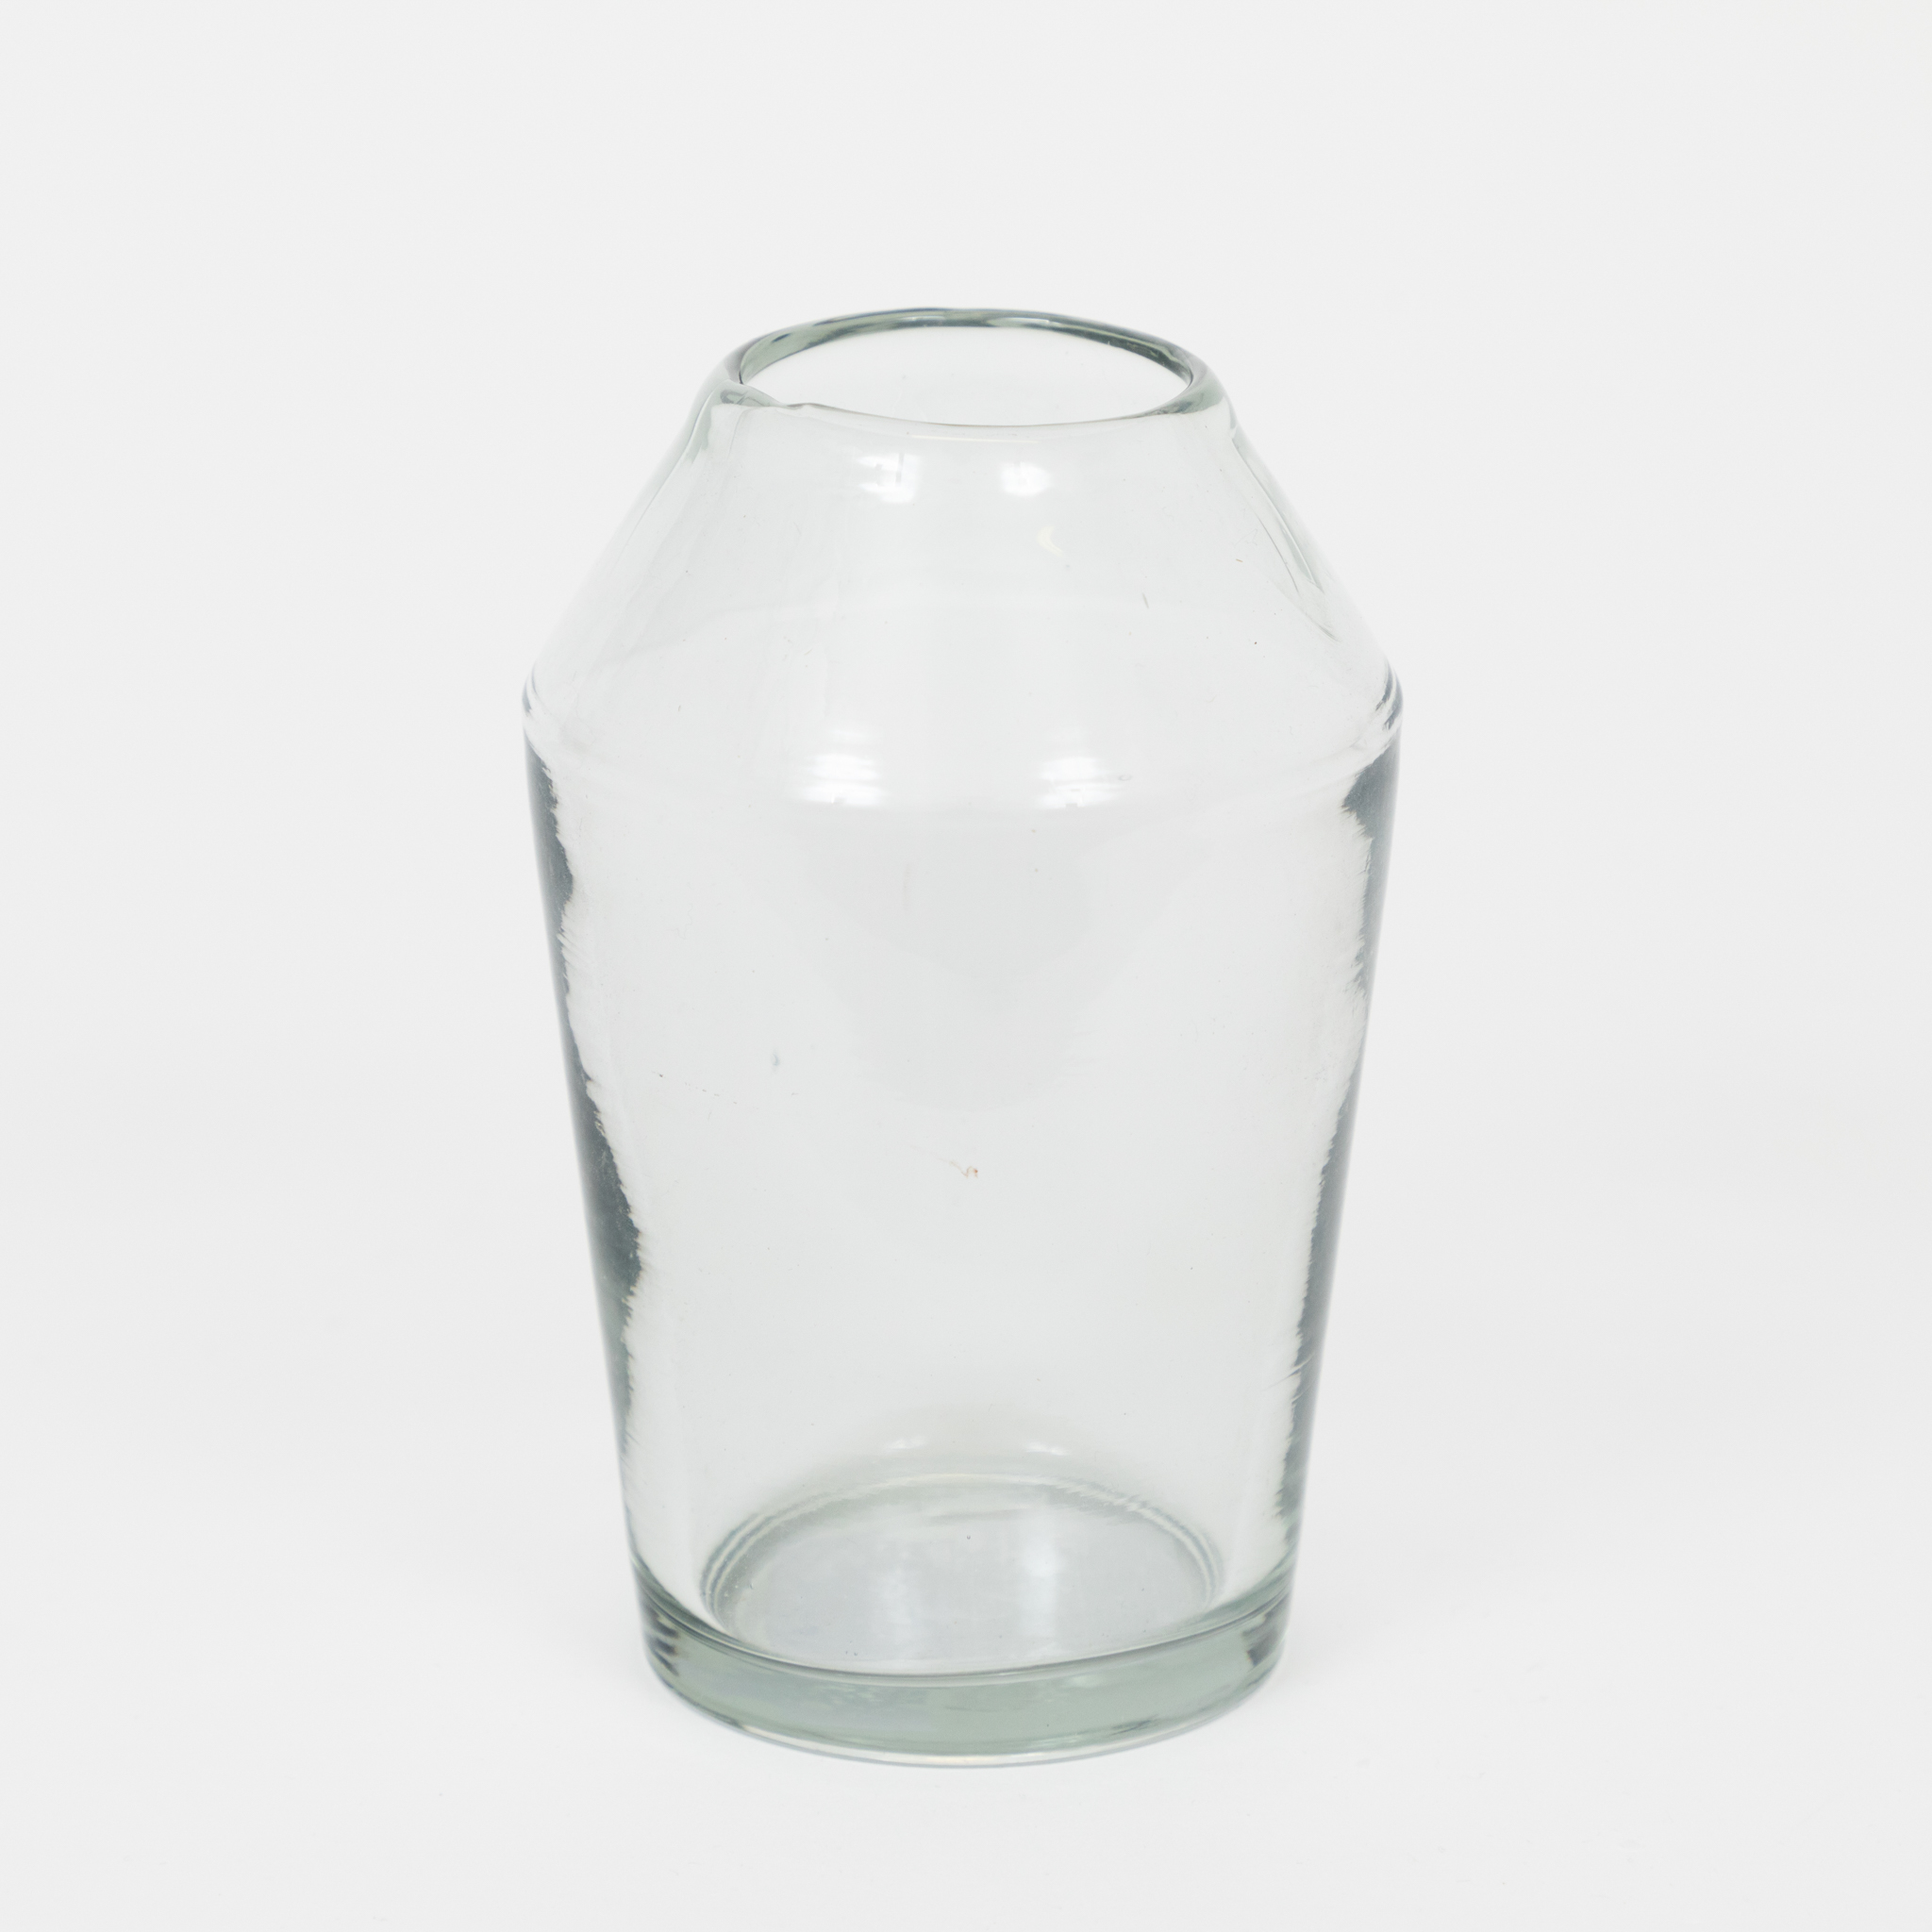 Ib Laursen Small Conical Handblown Opening Glass Vase